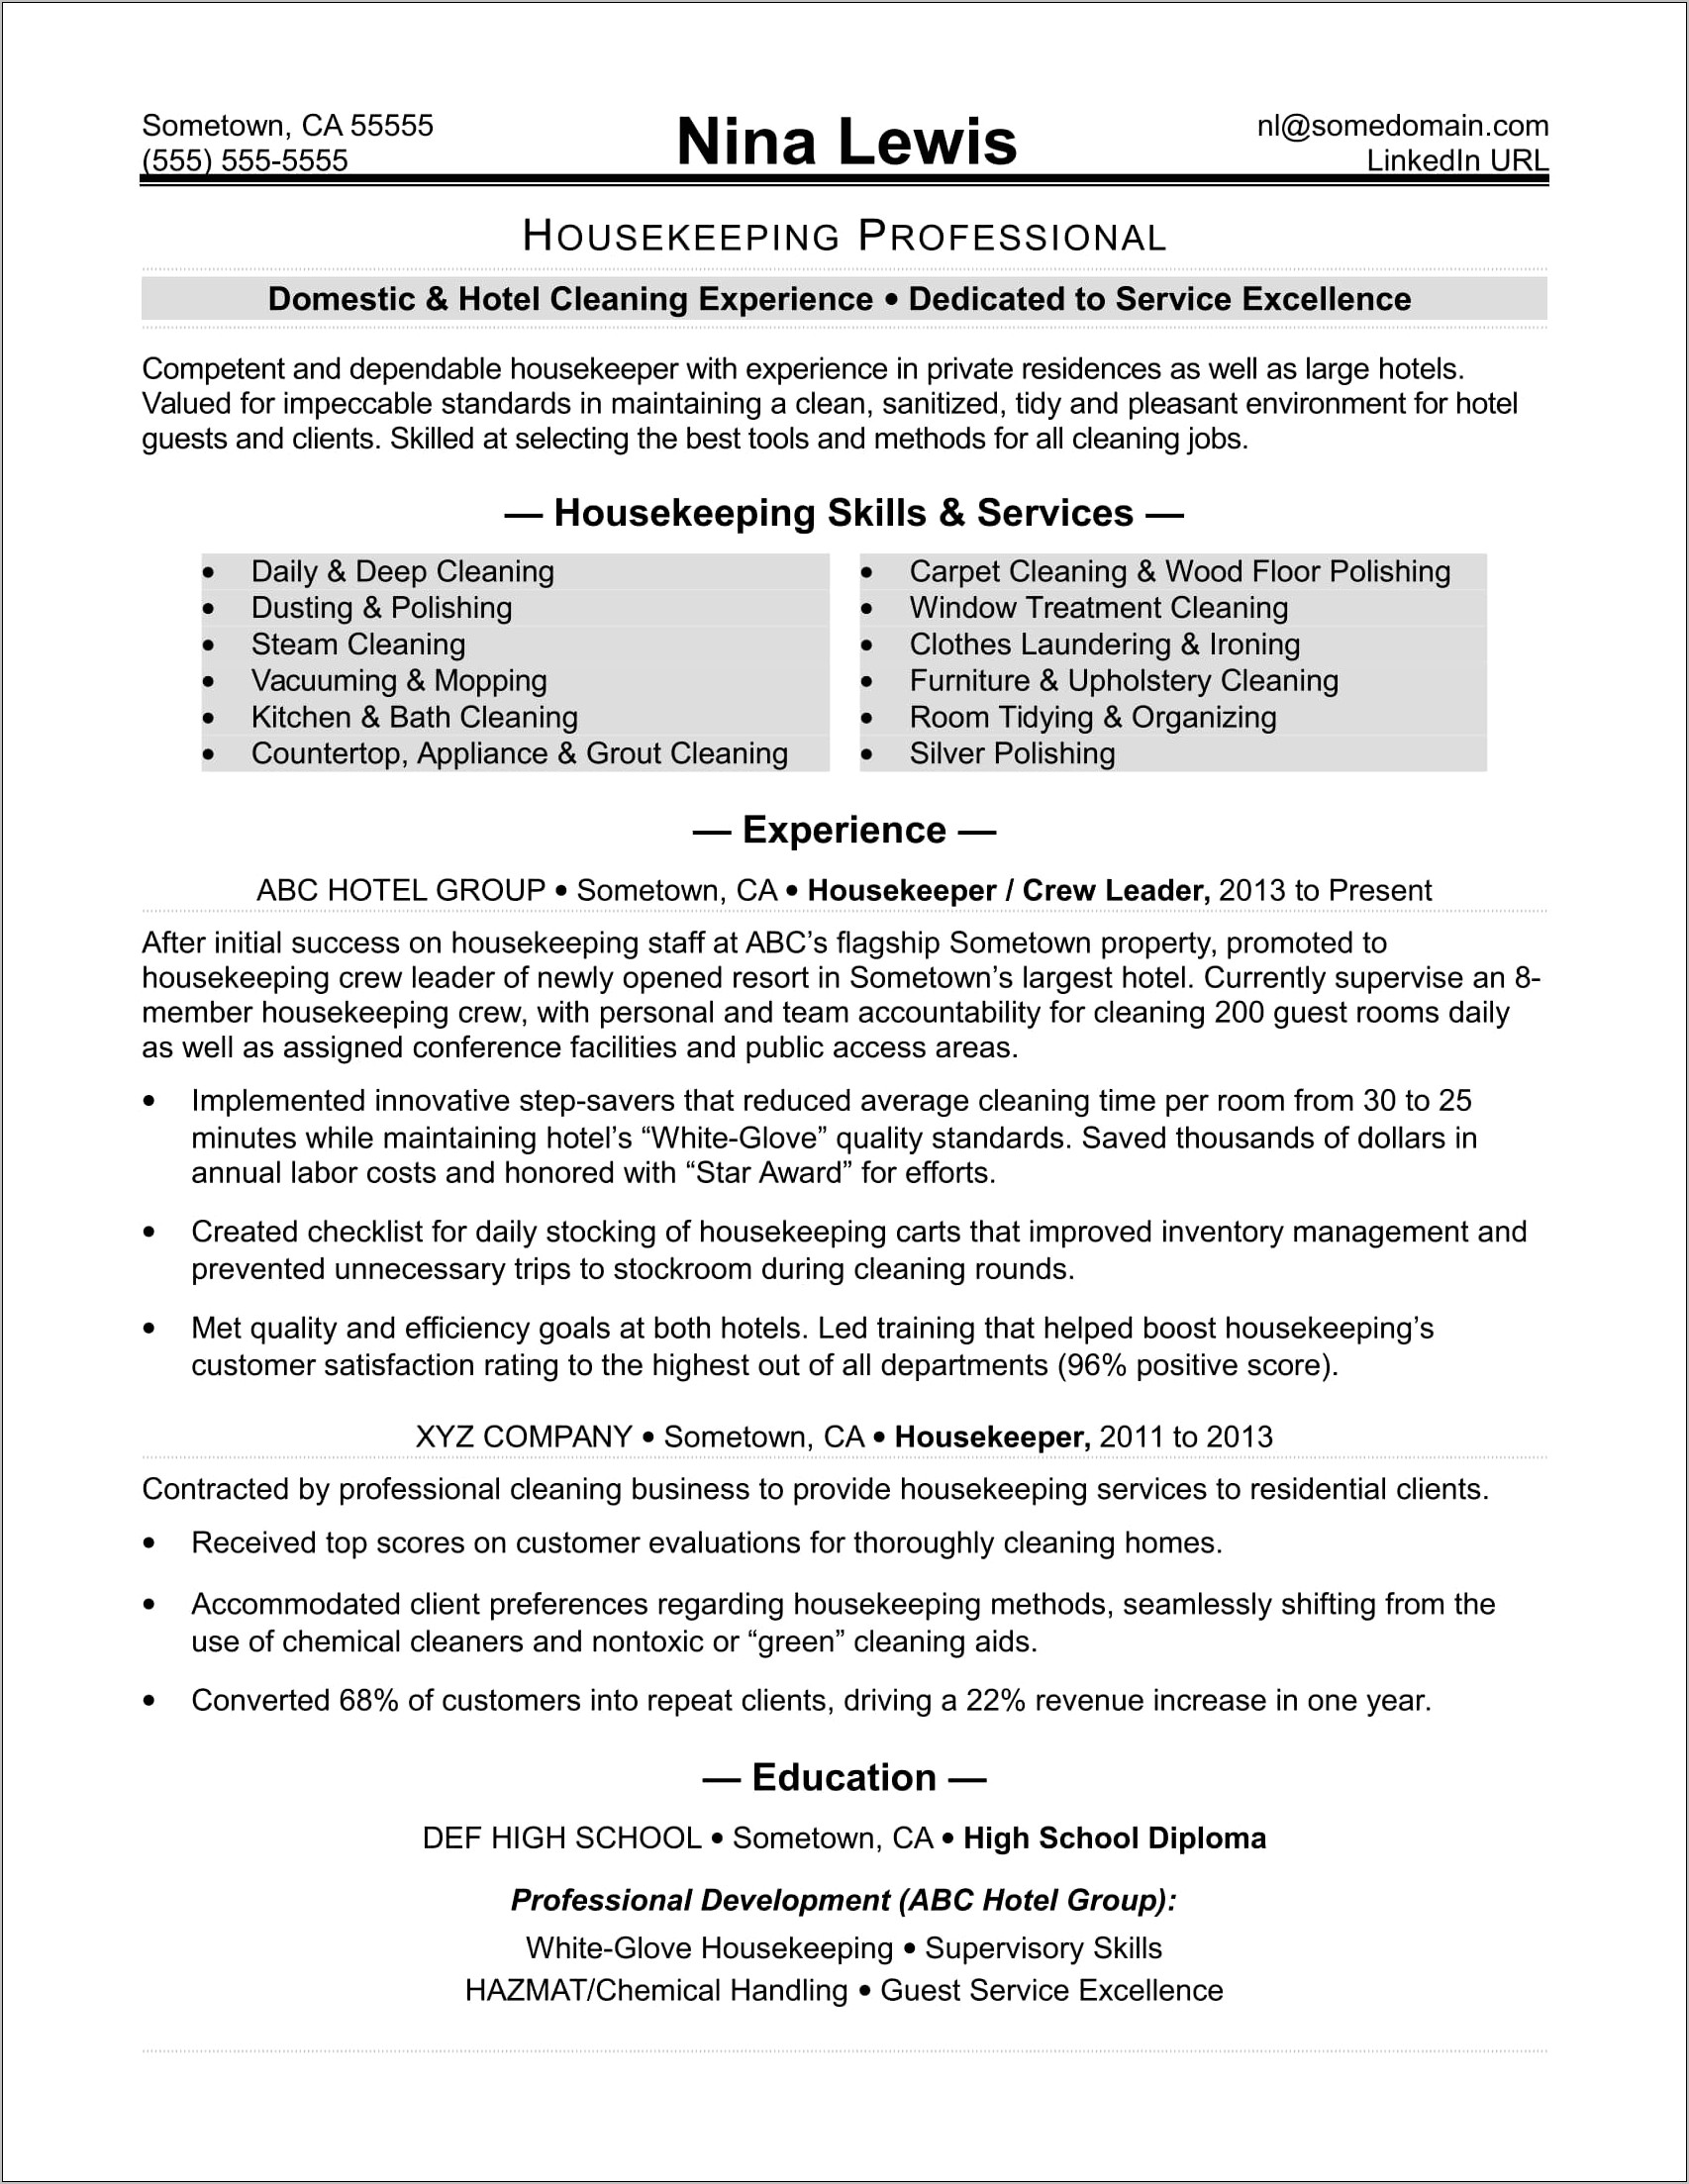 Resume Format For Hotel Job Pdf